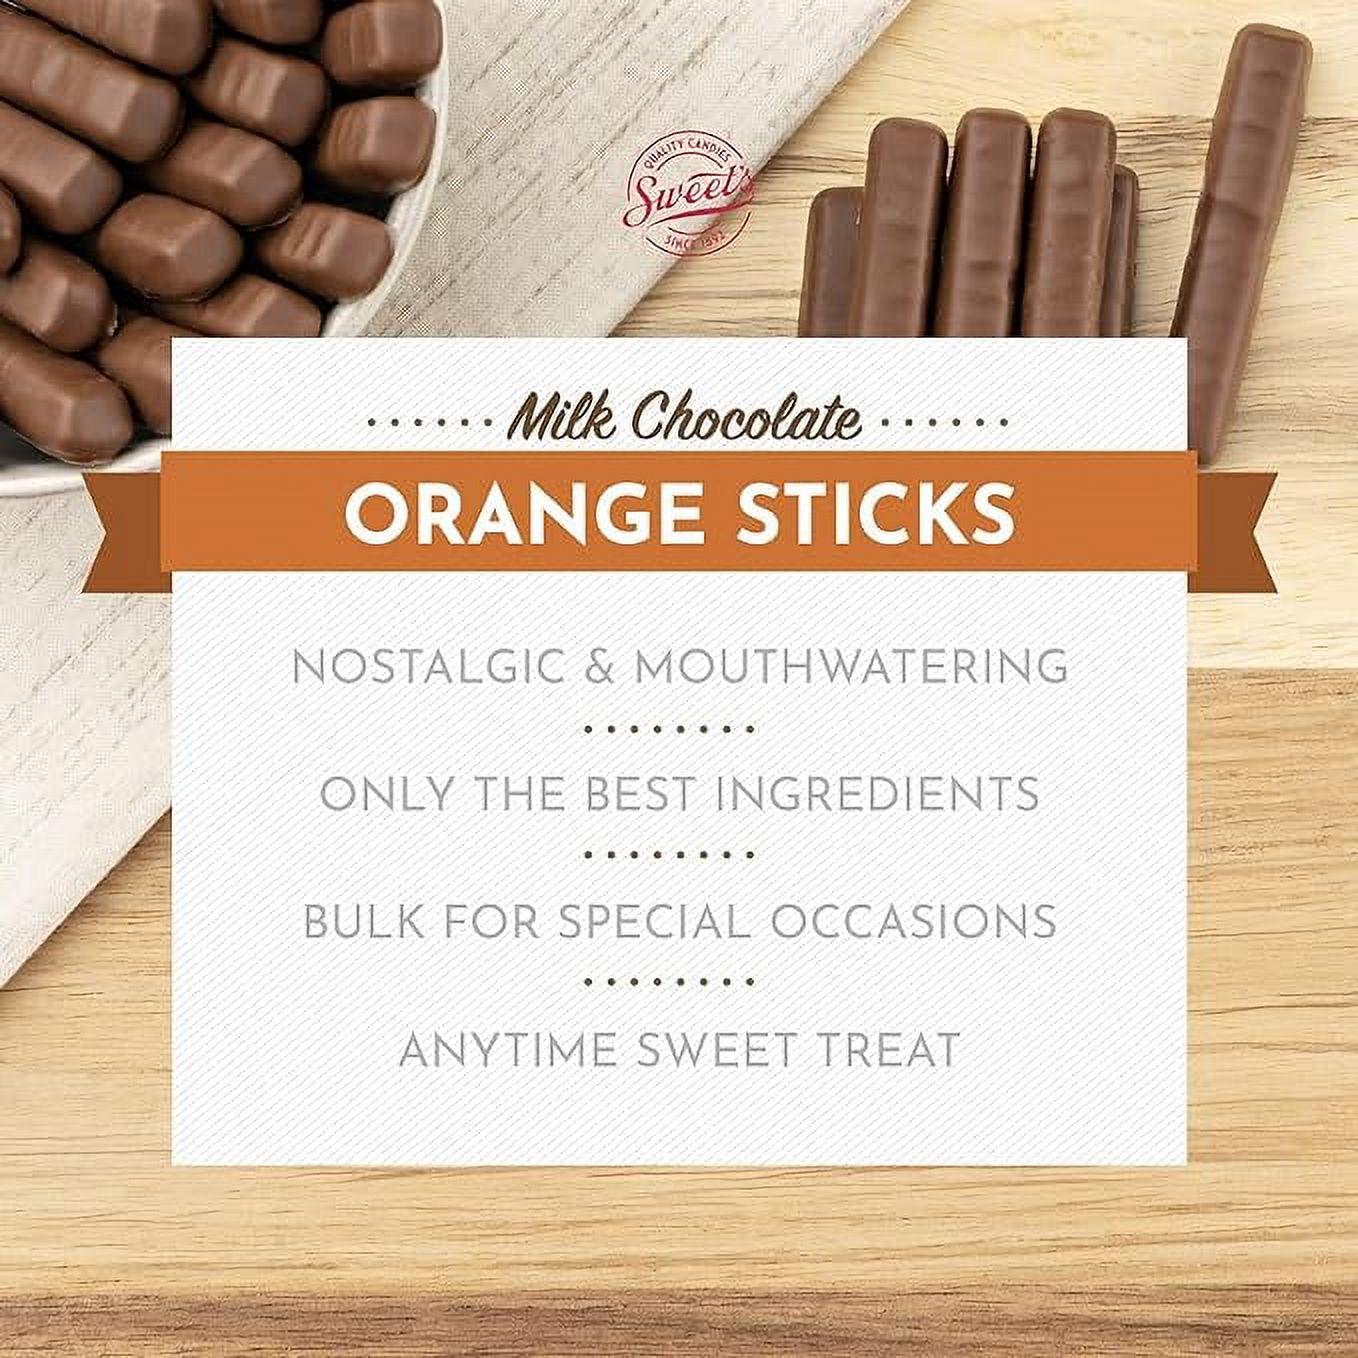 Sweet's Milk Chocolate Orange Sticks Box, 10.5 oz. - image 4 of 5